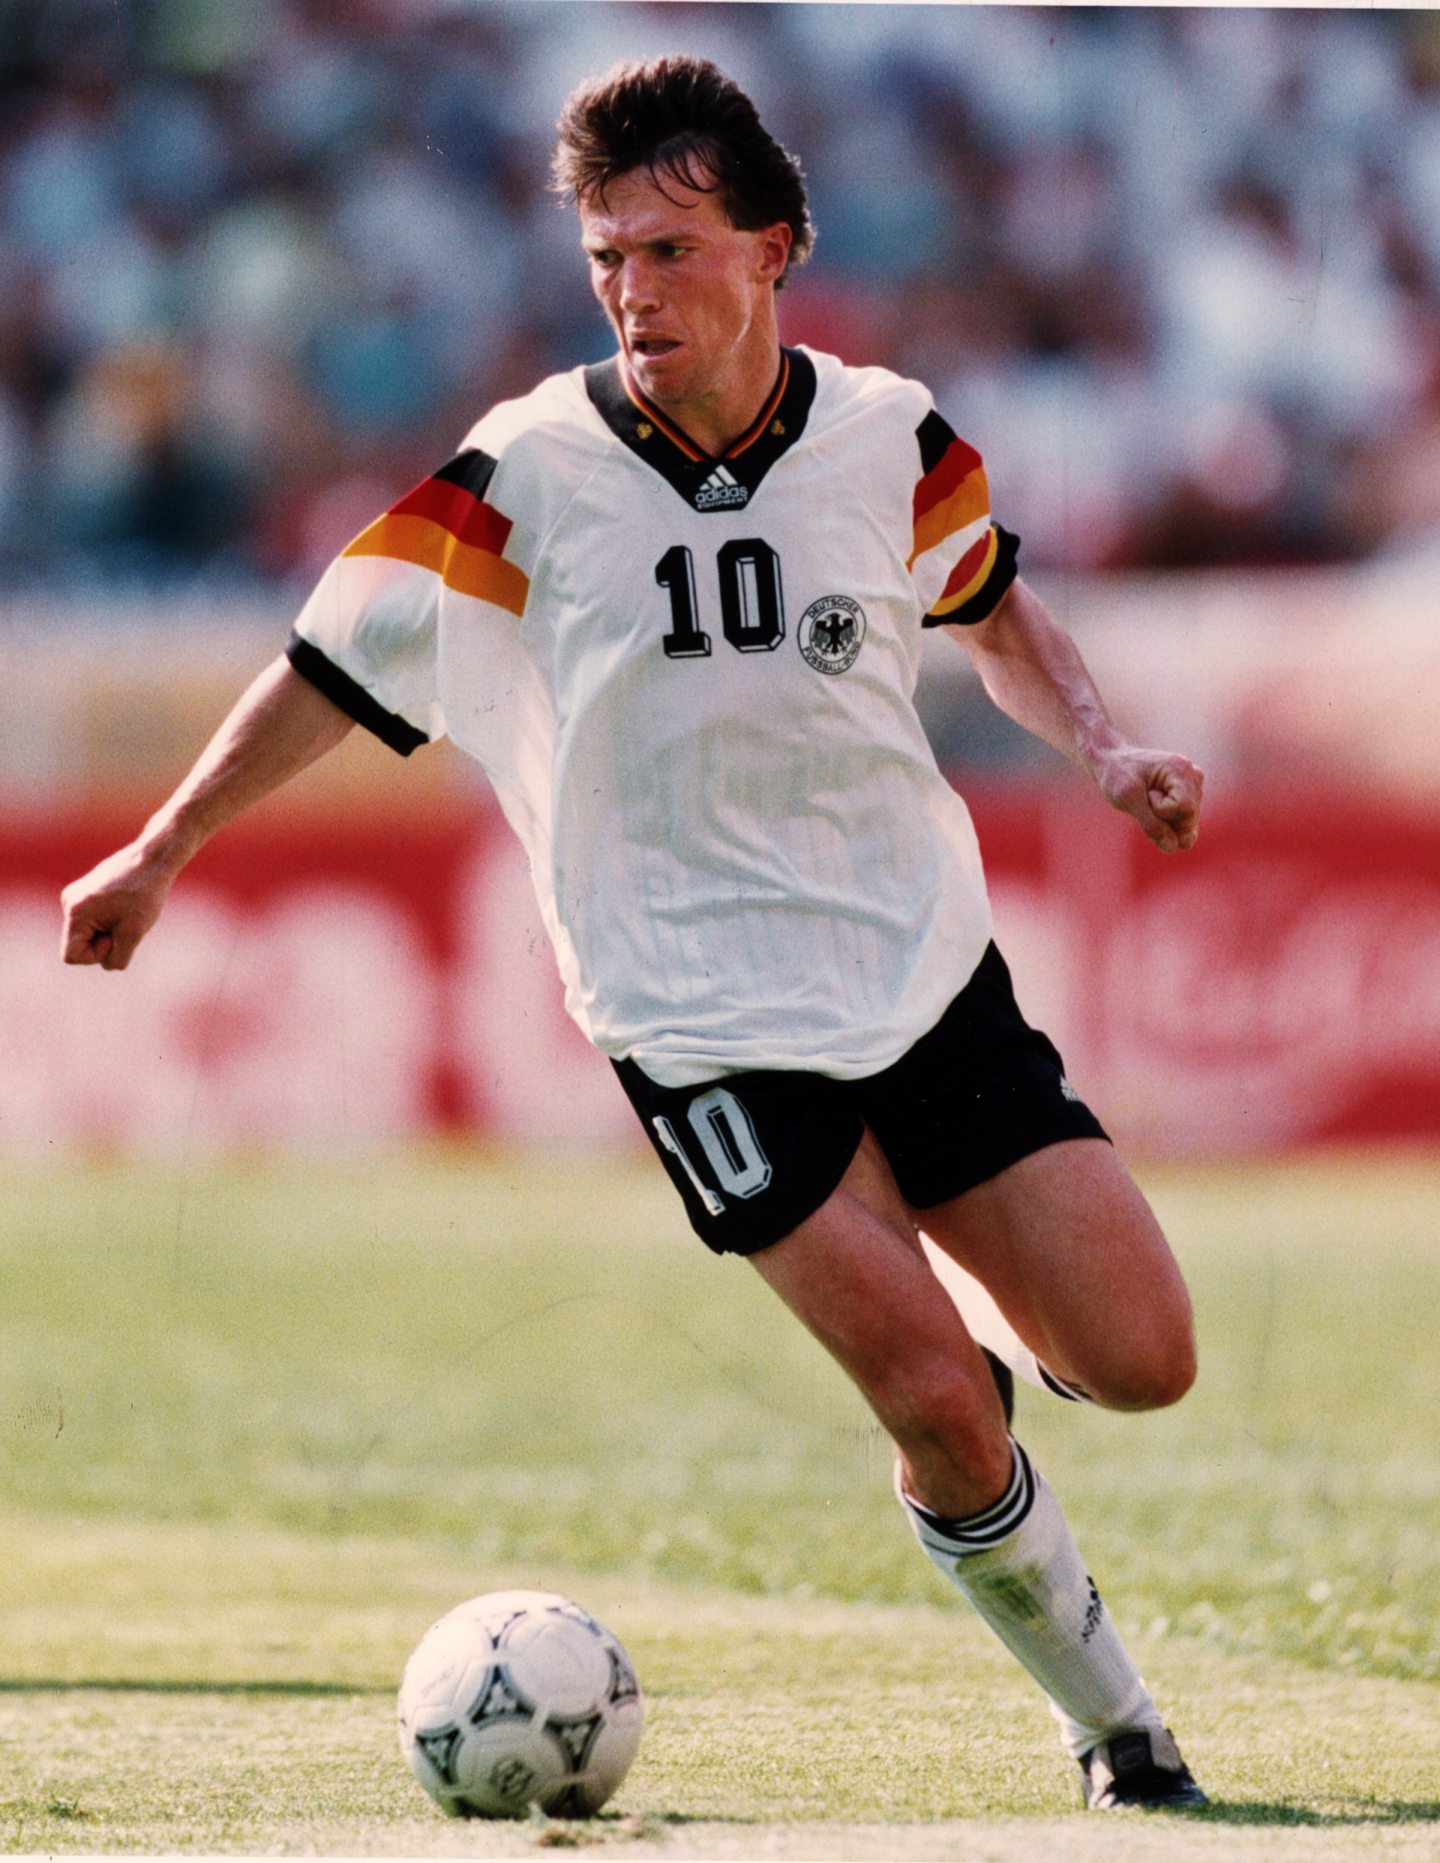 Matthäus played against United back in 1981.